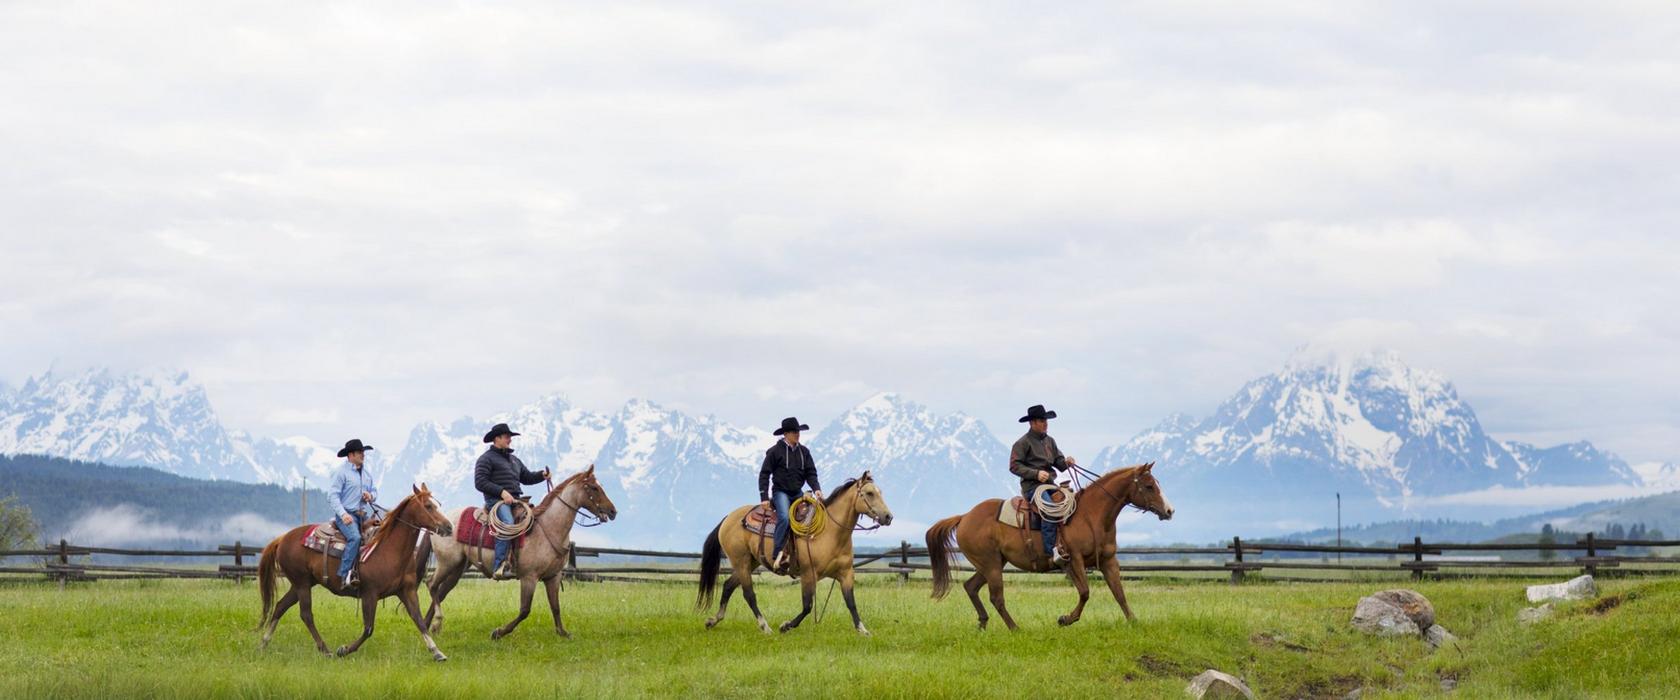 four men riding horses